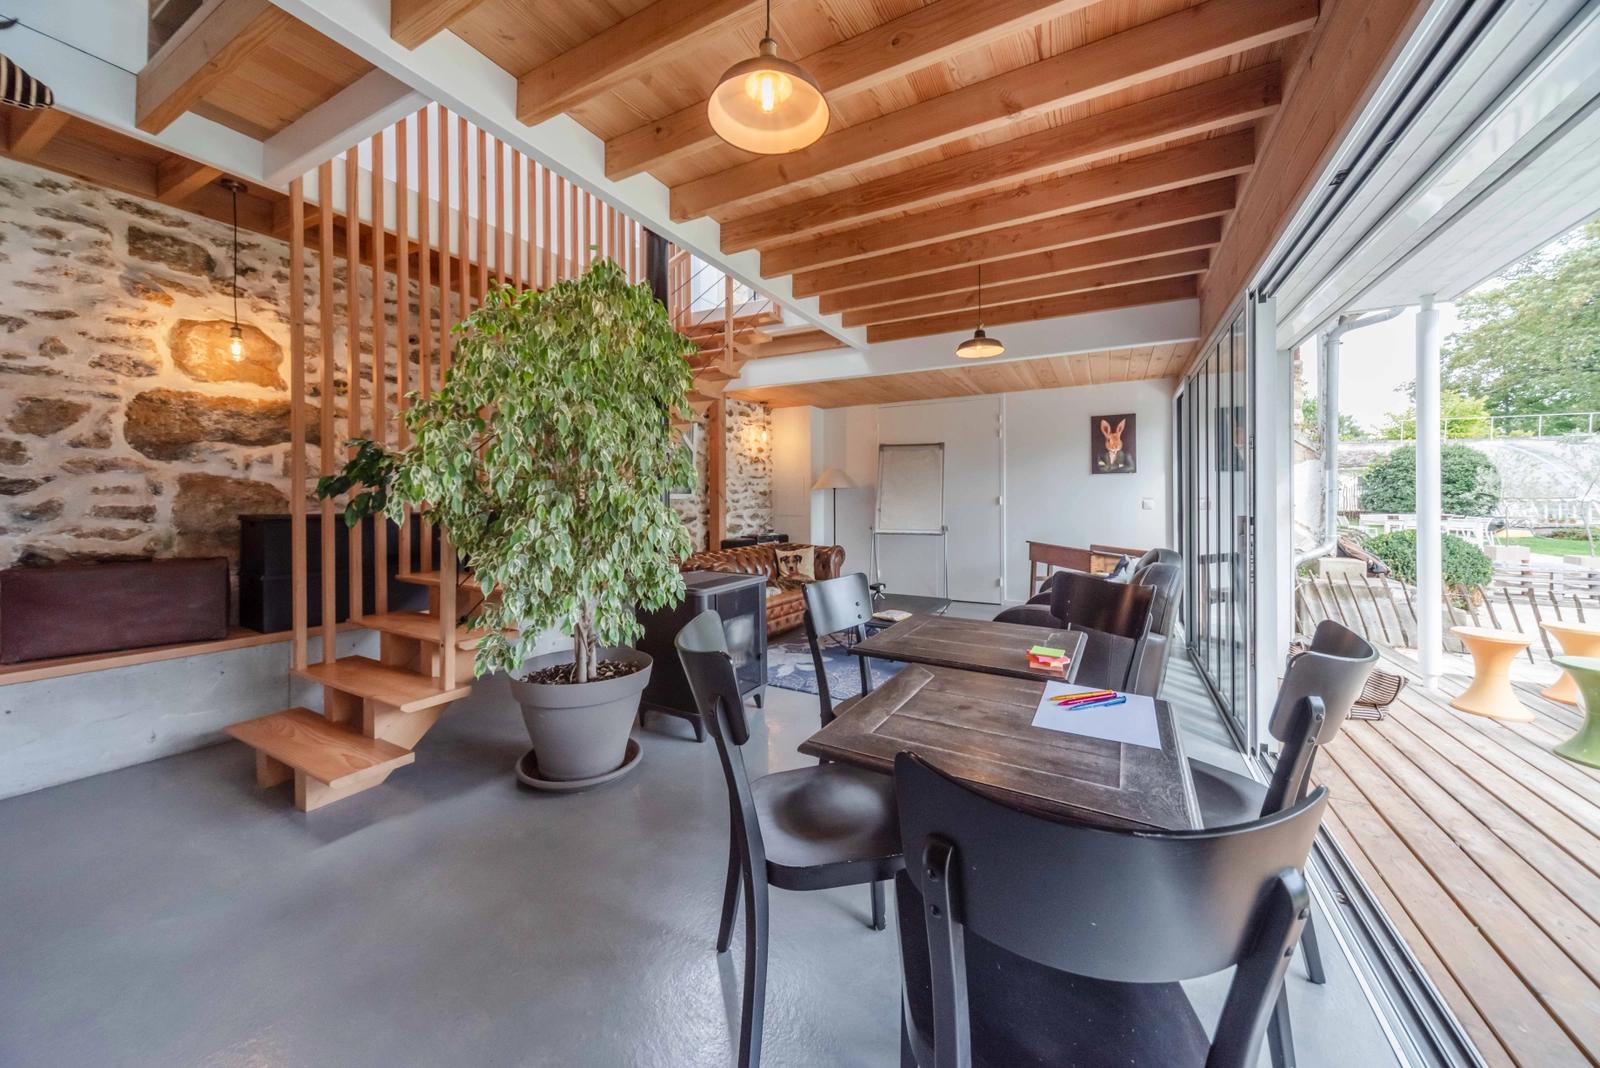 Comedor dentro Casa "loft" de madera diseñada por un arquitecto cerca de París - 3